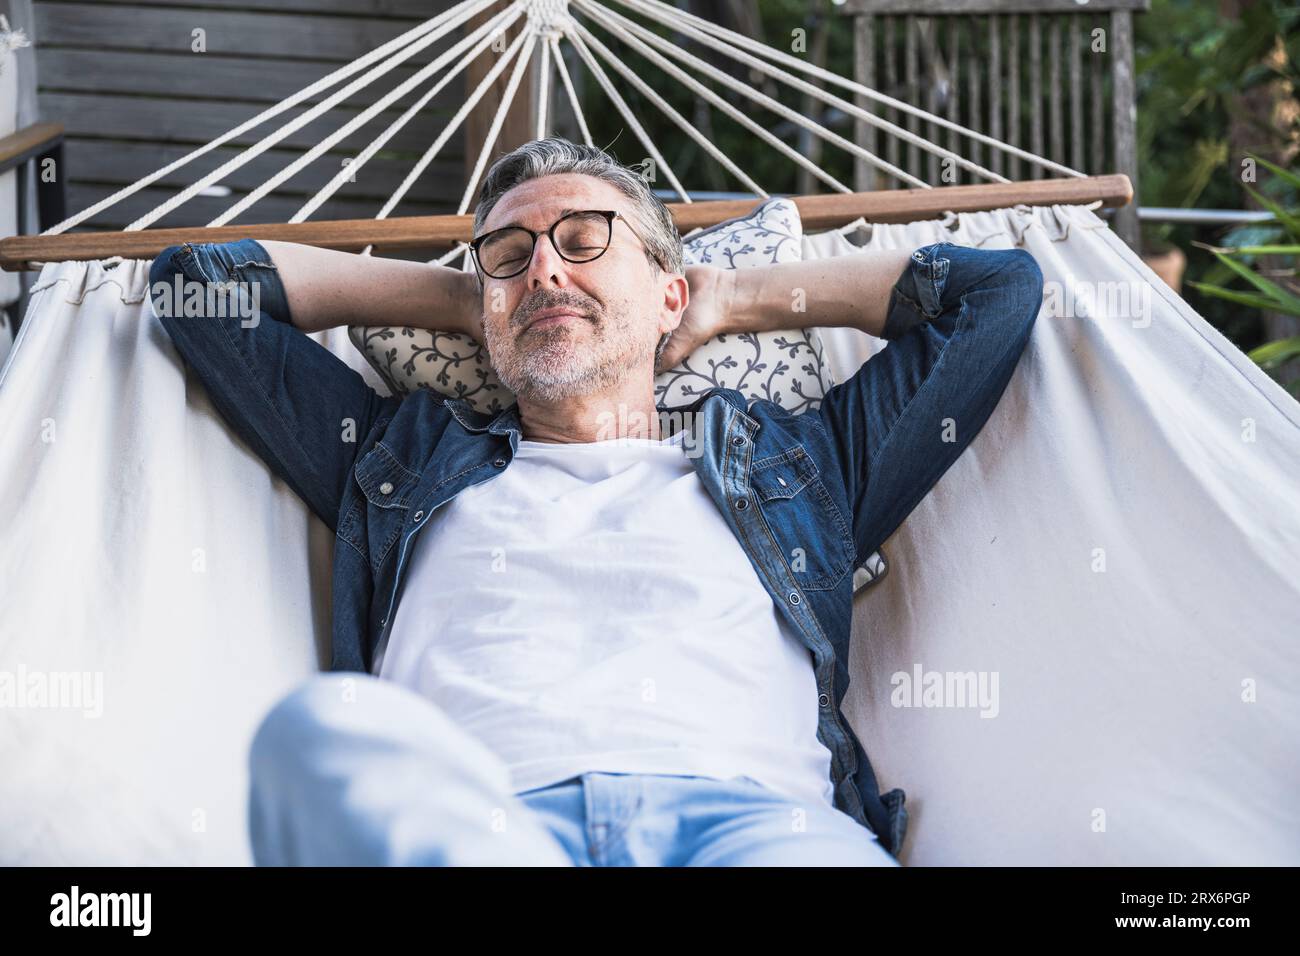 Mature man napping in hammock Stock Photo